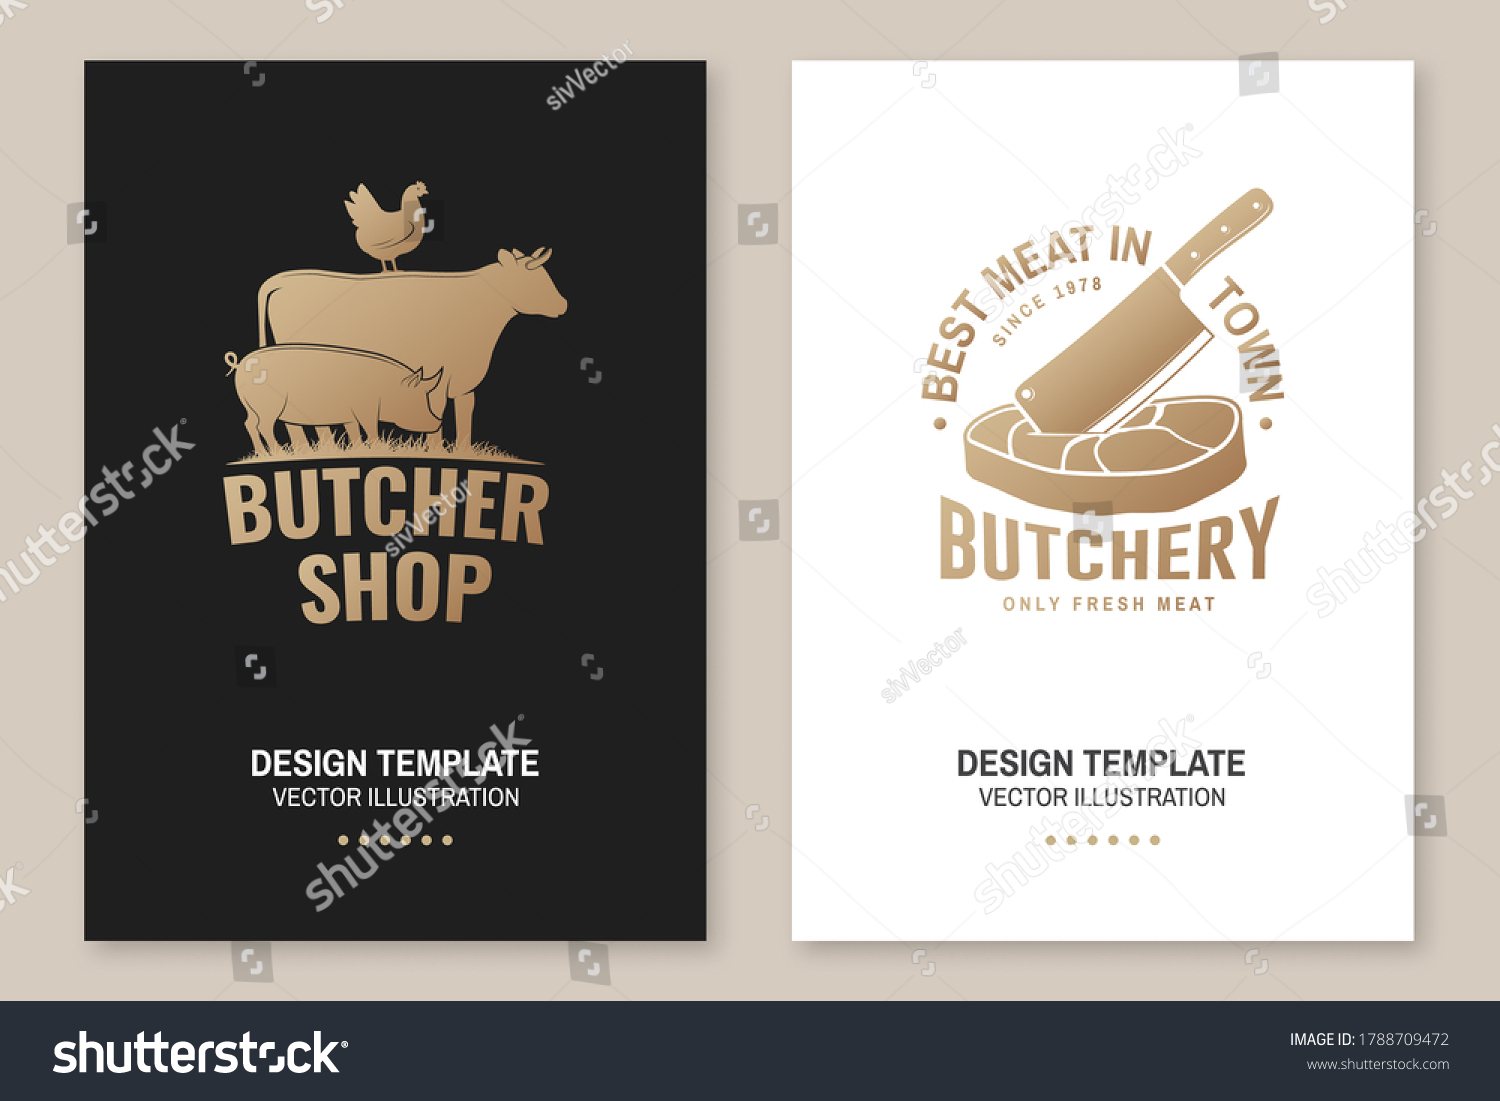 13,801 Butcher Shop Signs Images, Stock Photos & Vectors | Shutterstock